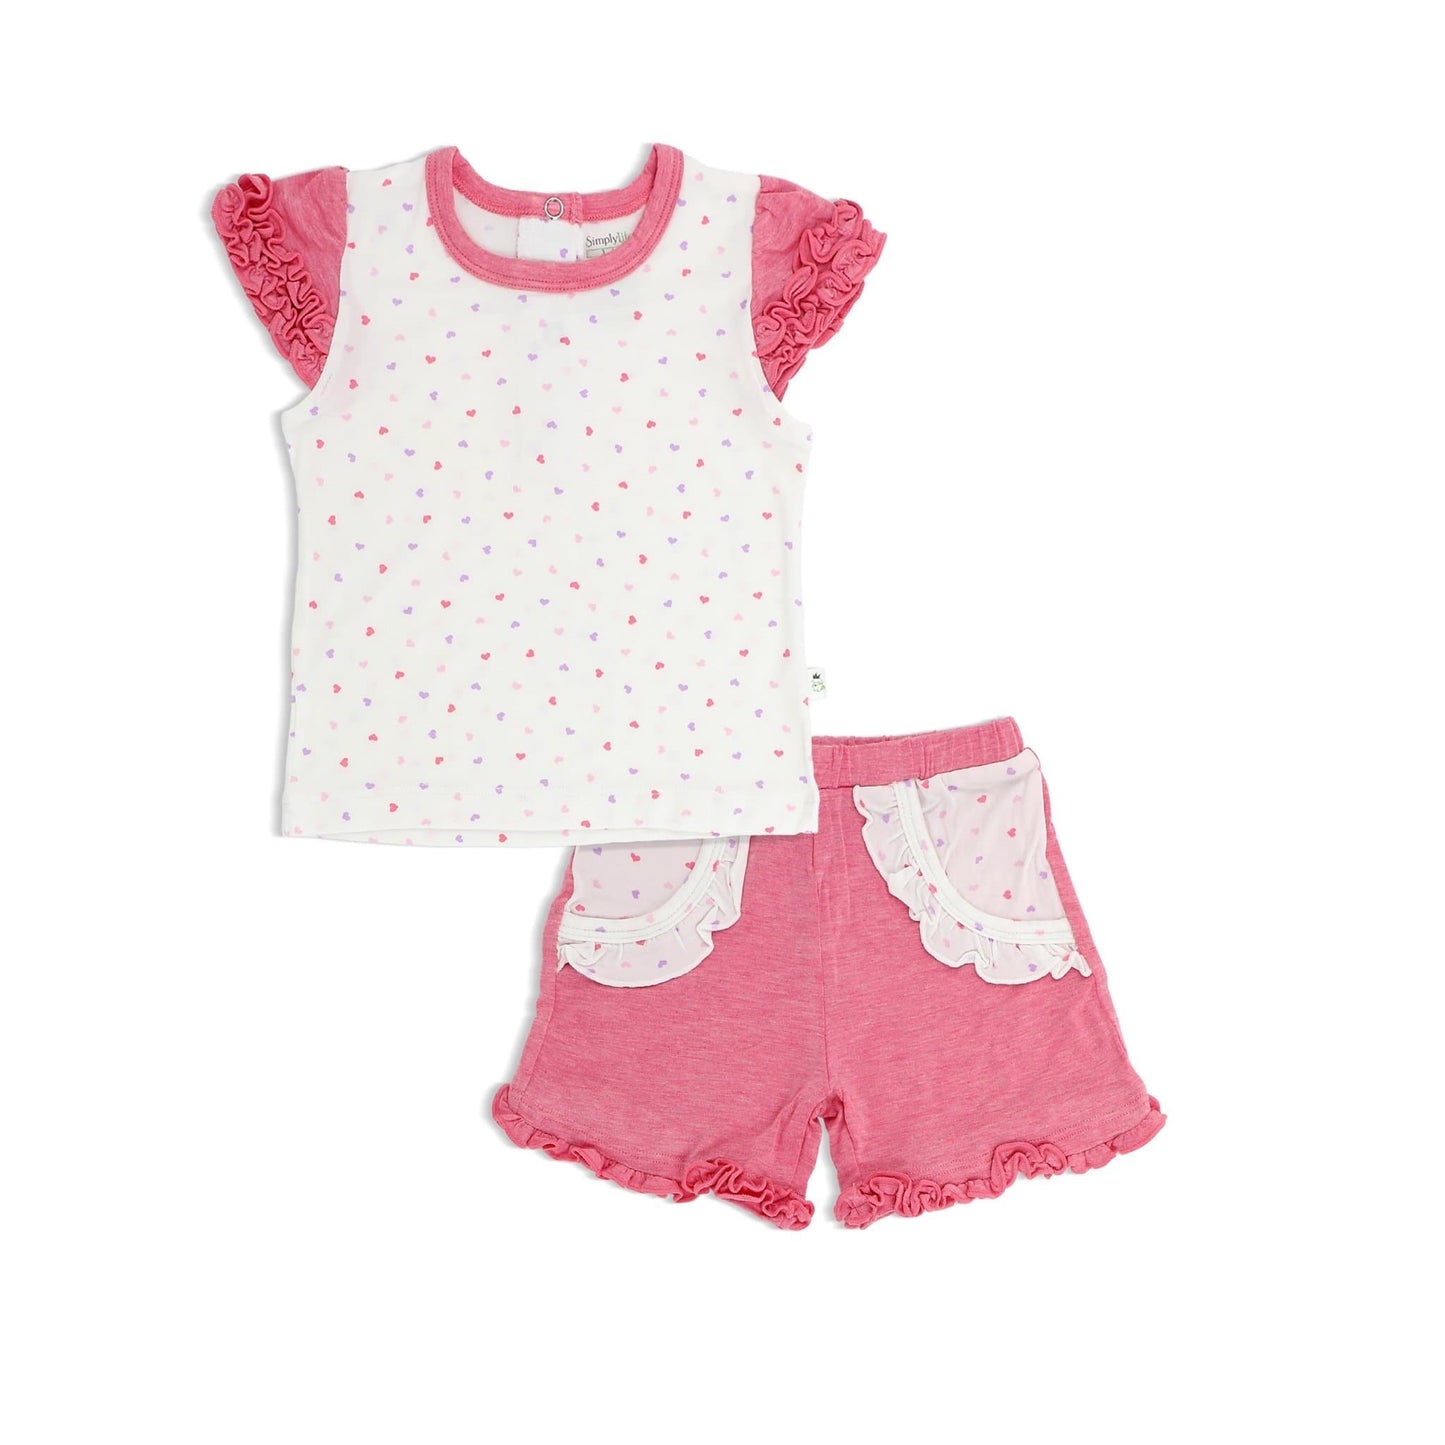 Hearts - Short-sleeved Tee with Ruffles & Shorts with Frills (mocked pocket) Baby Set - Simply Life